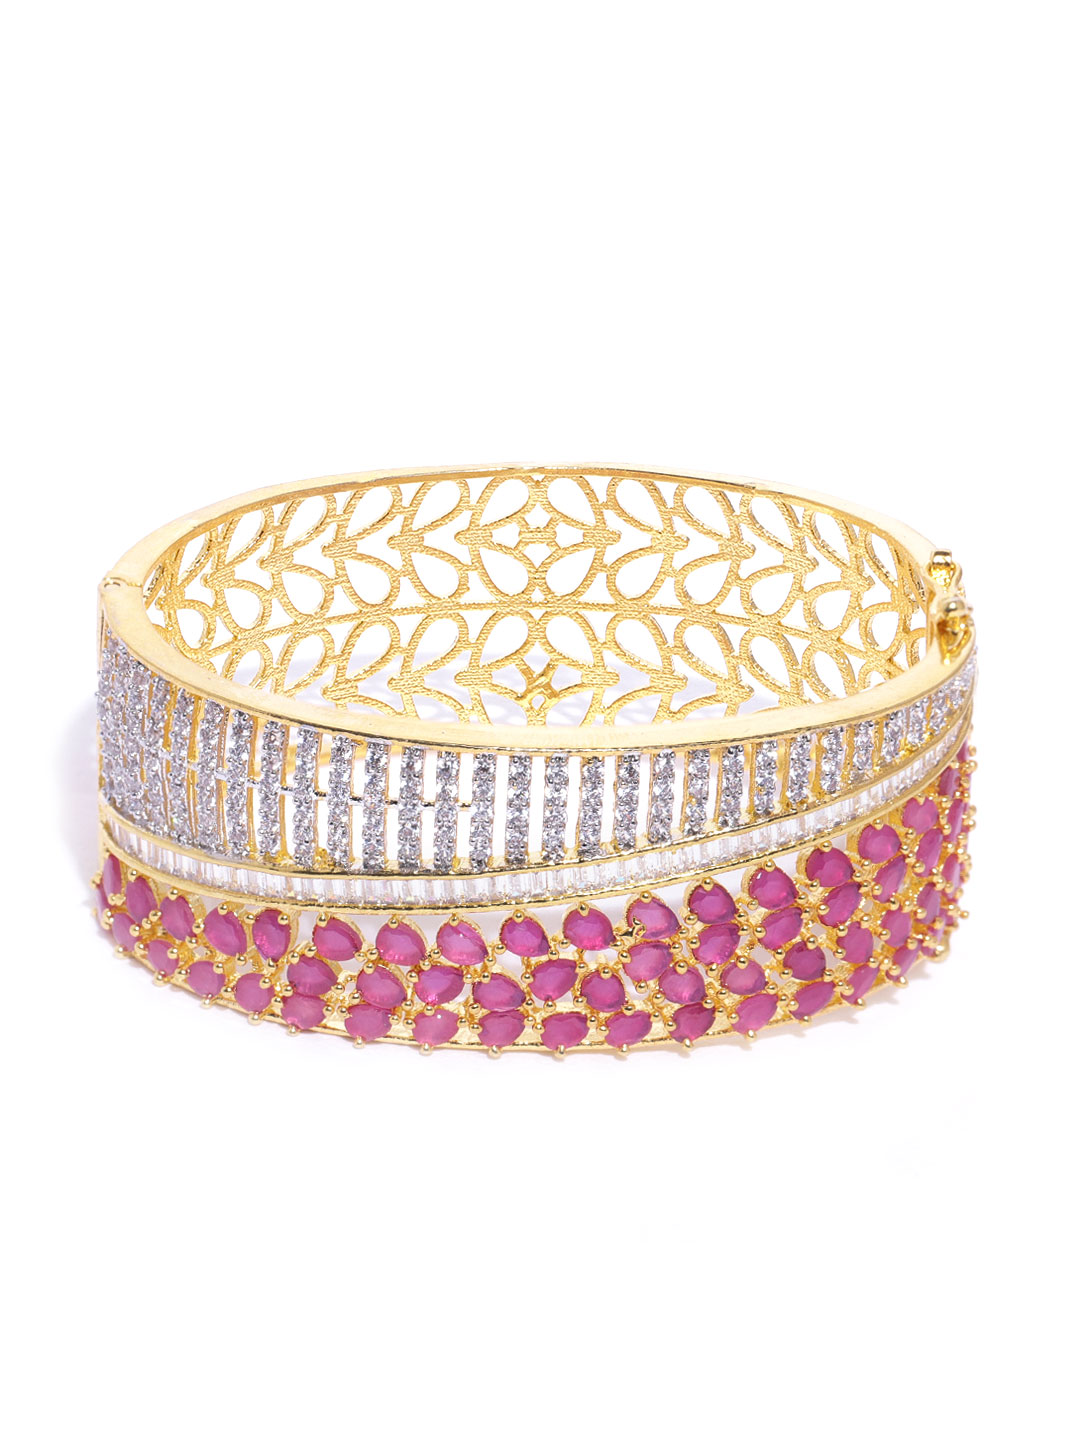 Gold-Plated American Diamond and Ruby Studded, Floral Patterned Kada Bracelet